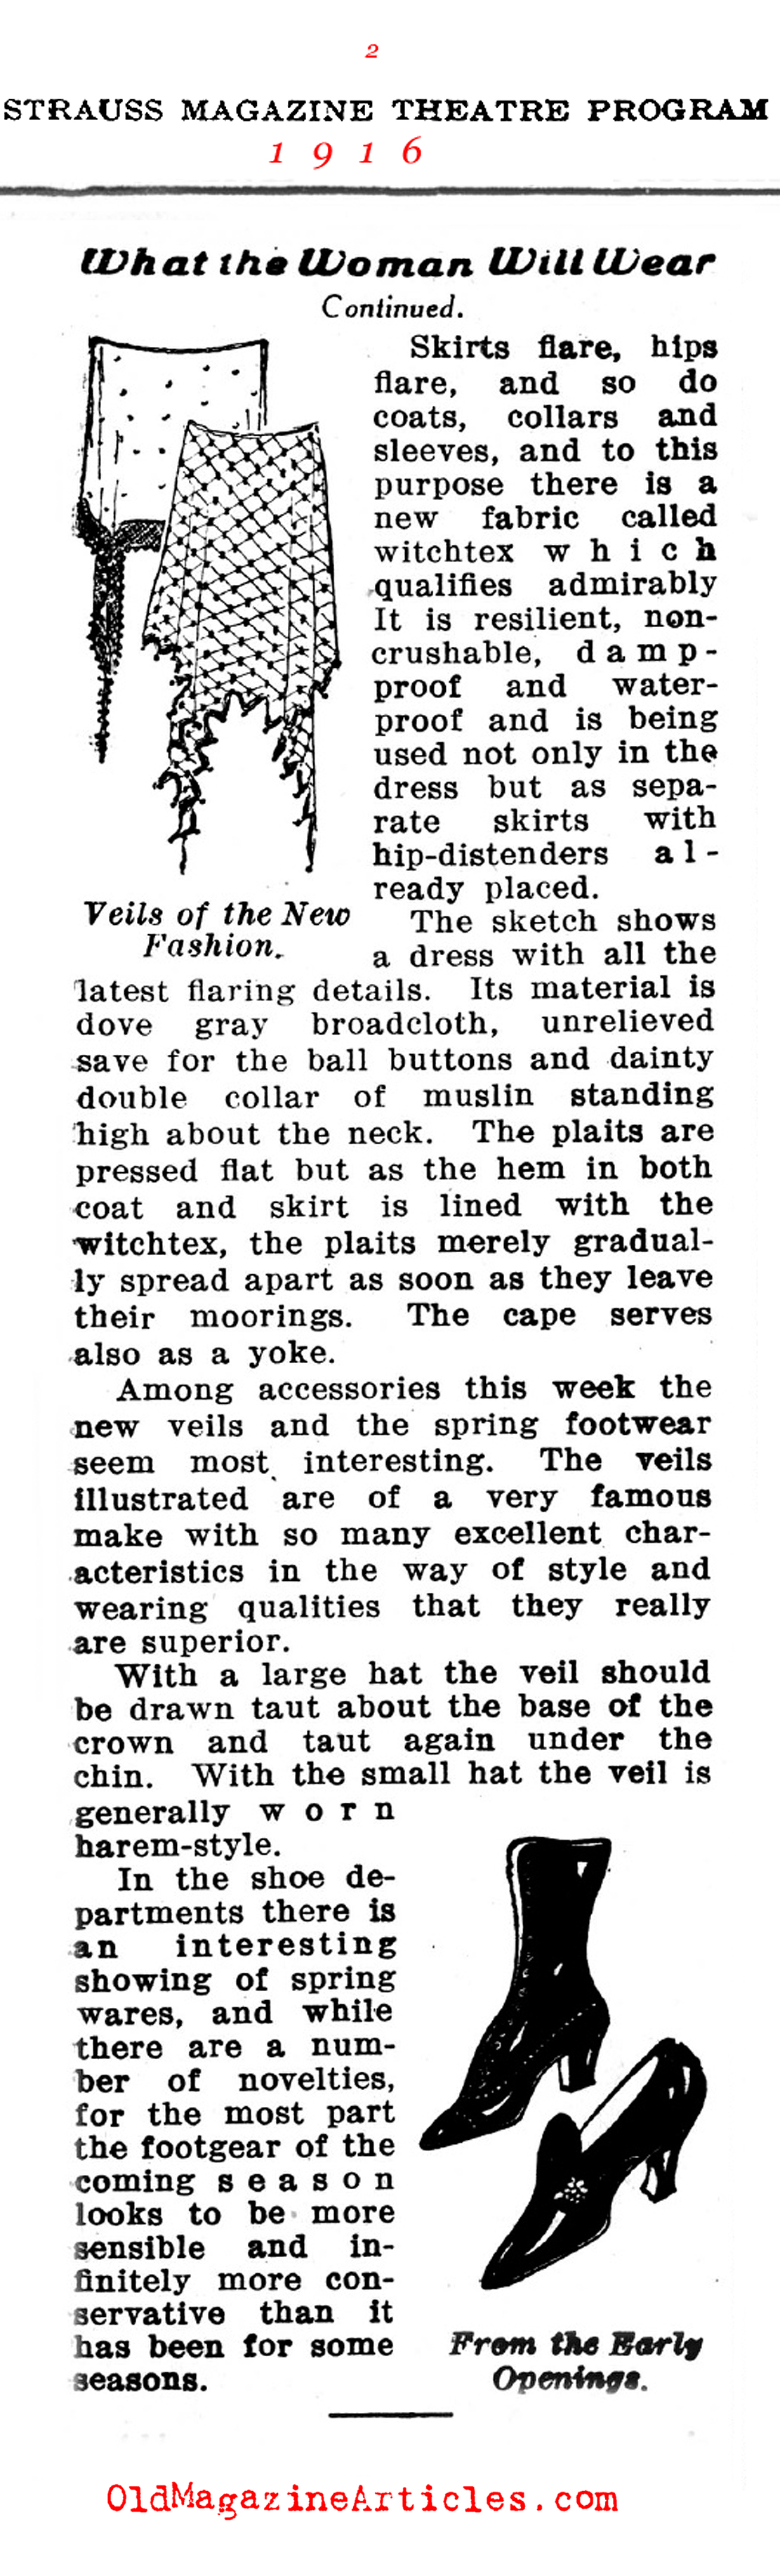  New York Fashions for Spring   (Strauss Magazine Theatre Program, 1916)